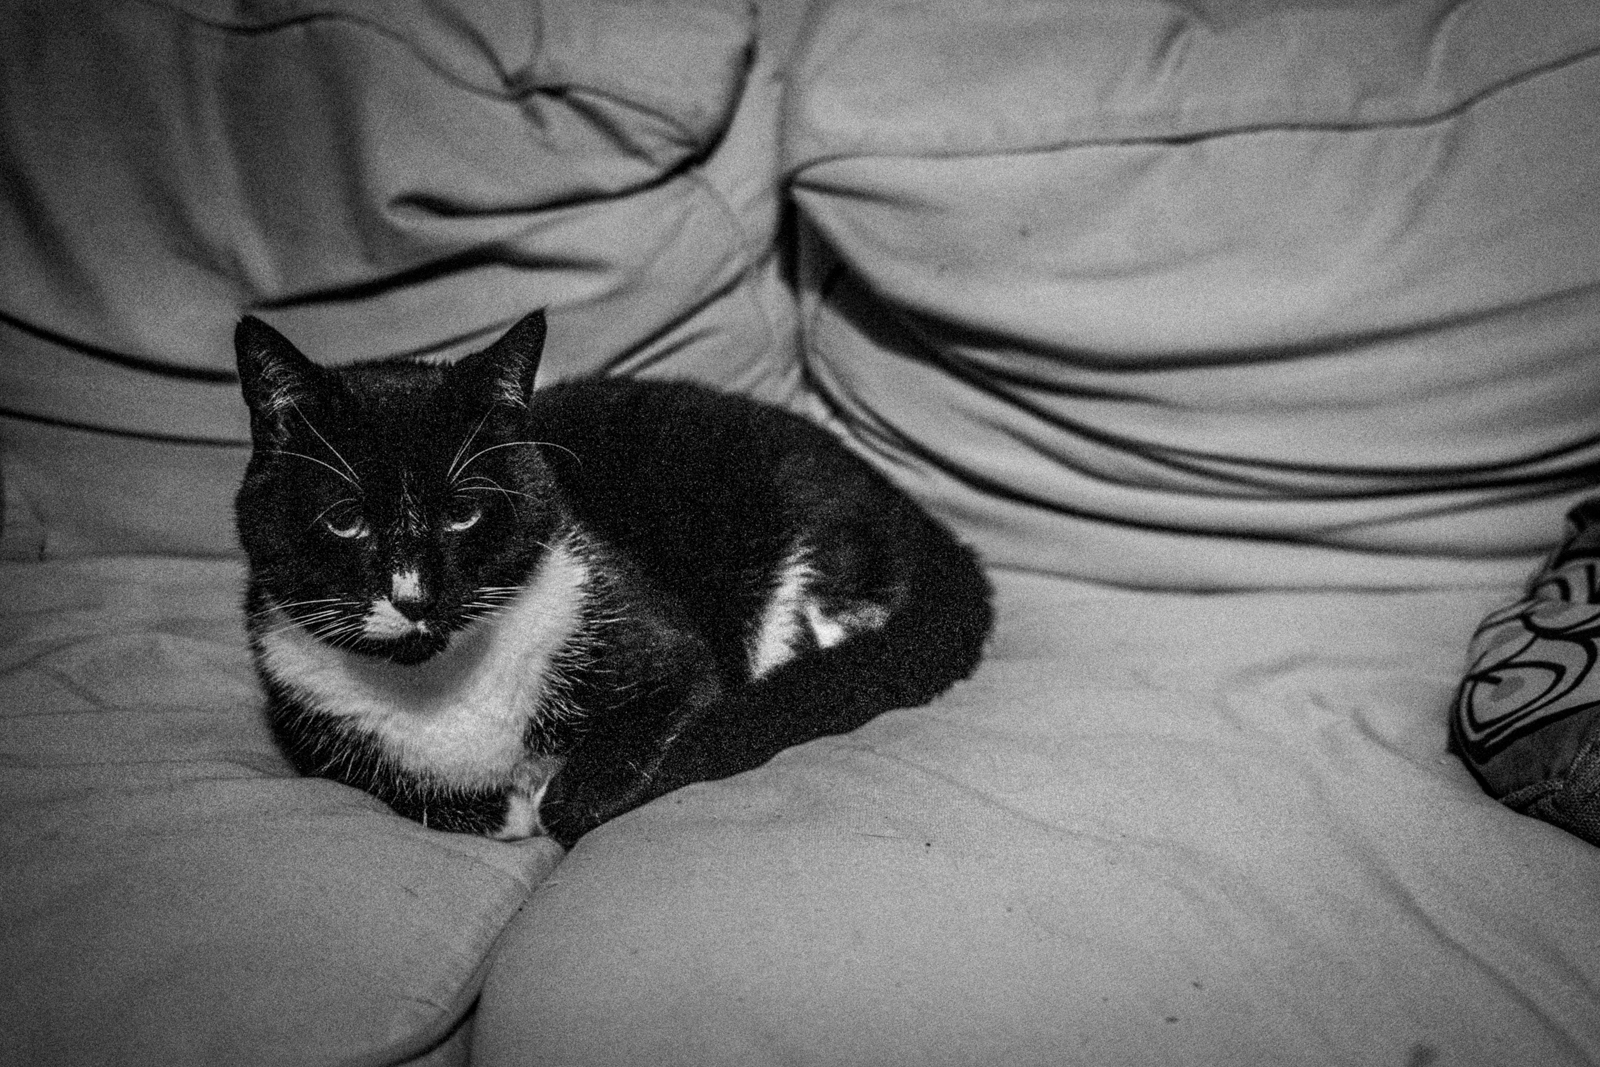 Cat on a sofa